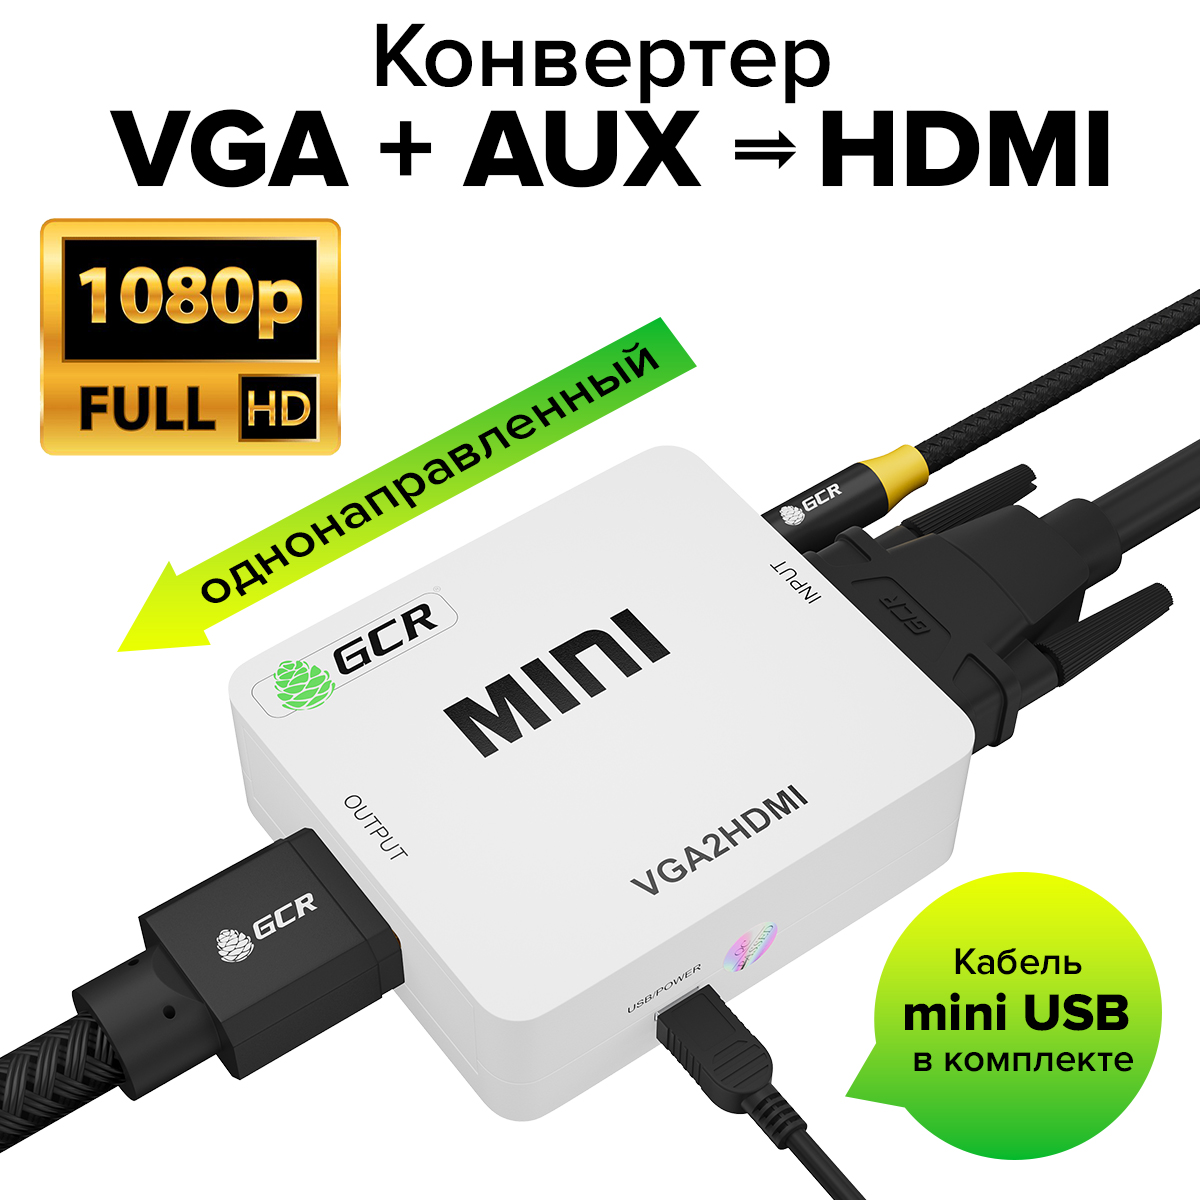 GCR Конвертер  переходник VGA -> HDMI 1.3, 1080p 60Hz, 3.5 mm мини джек